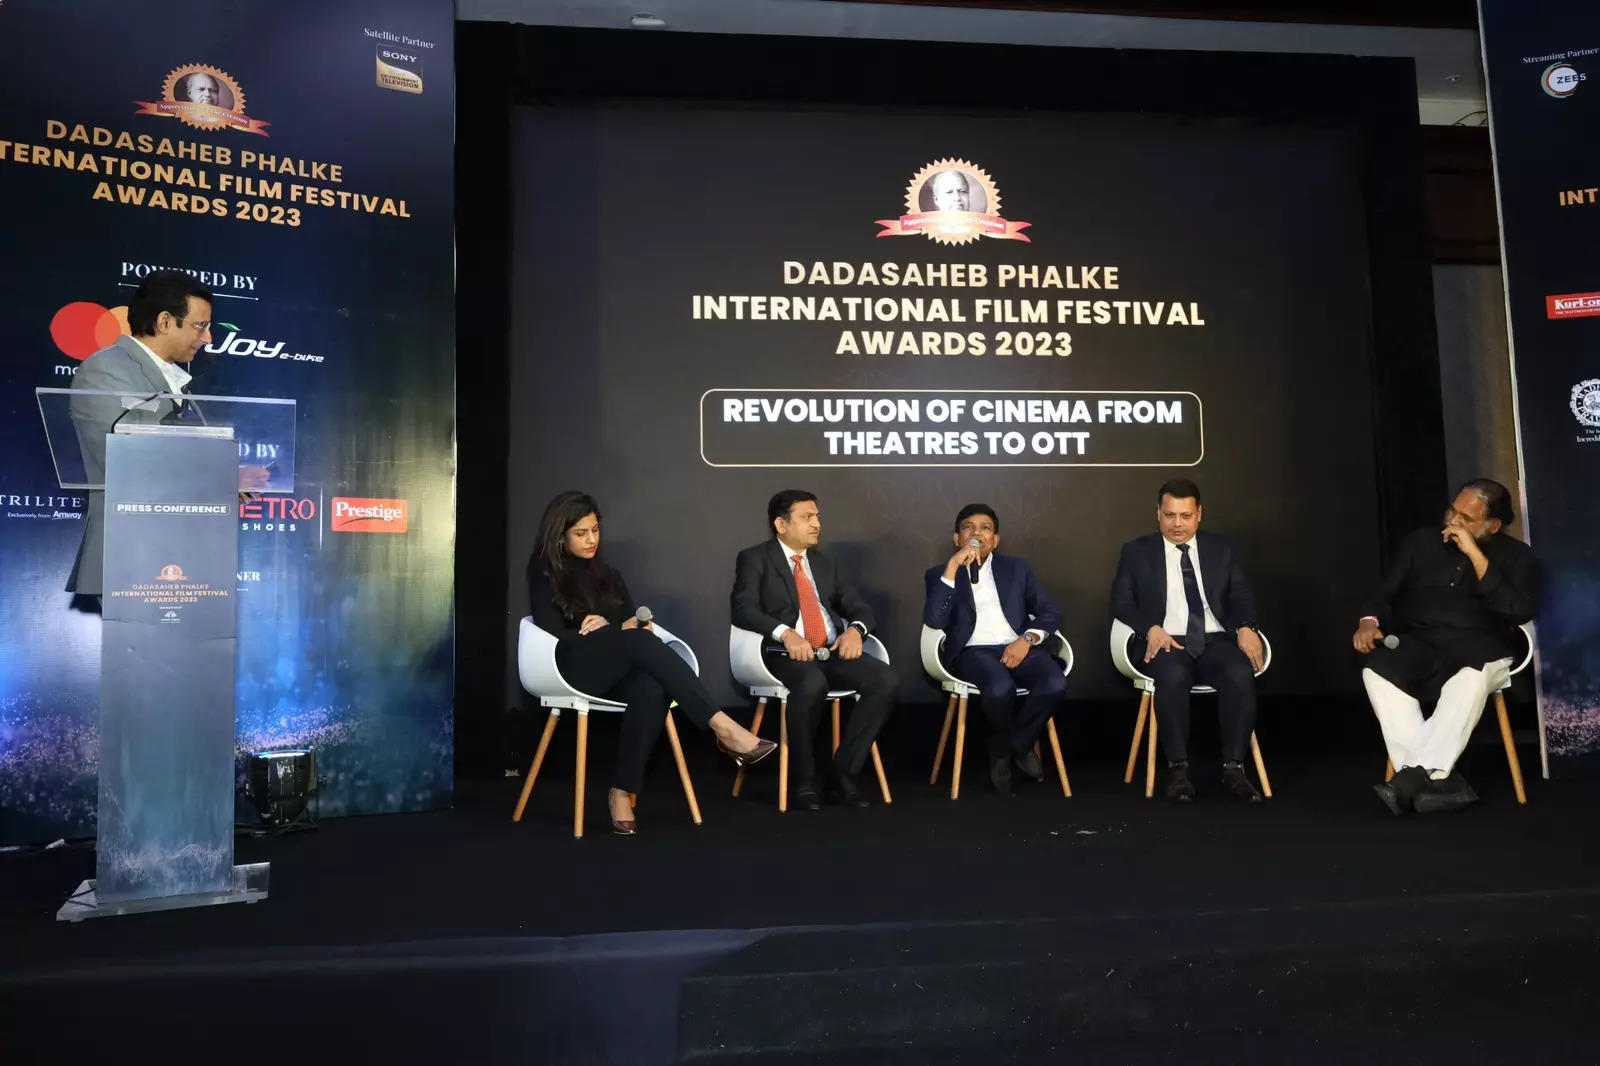 In Pics: Dadasaheb Phalke International Film Festival Hosts a Press Conference for 2023 Award Ceremony